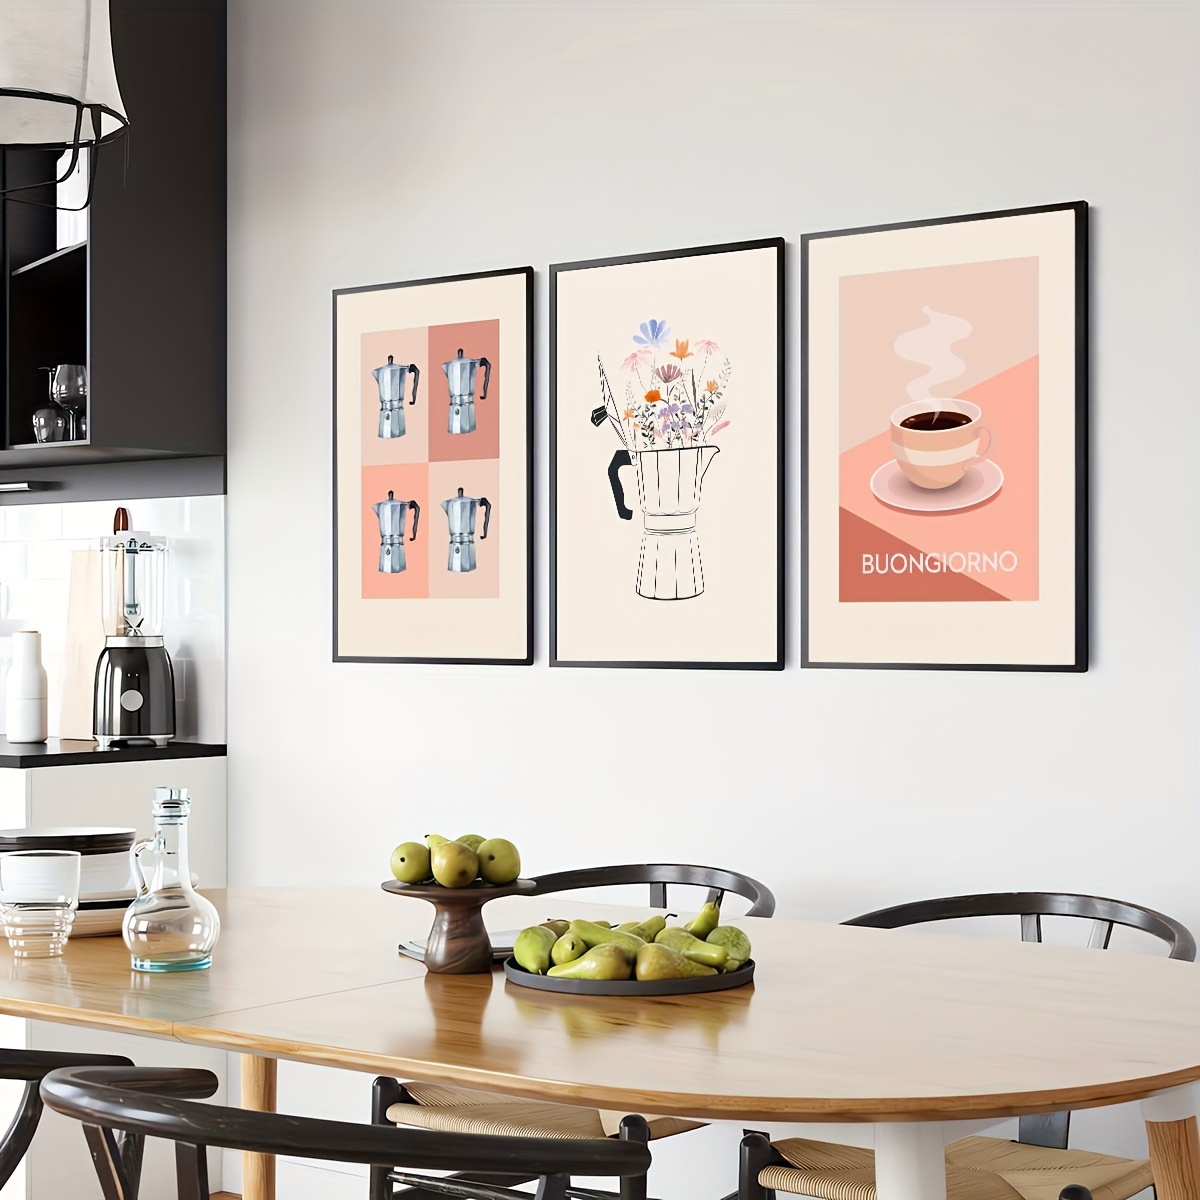 Coffee bar decor ideas, set of 3 wall art prints